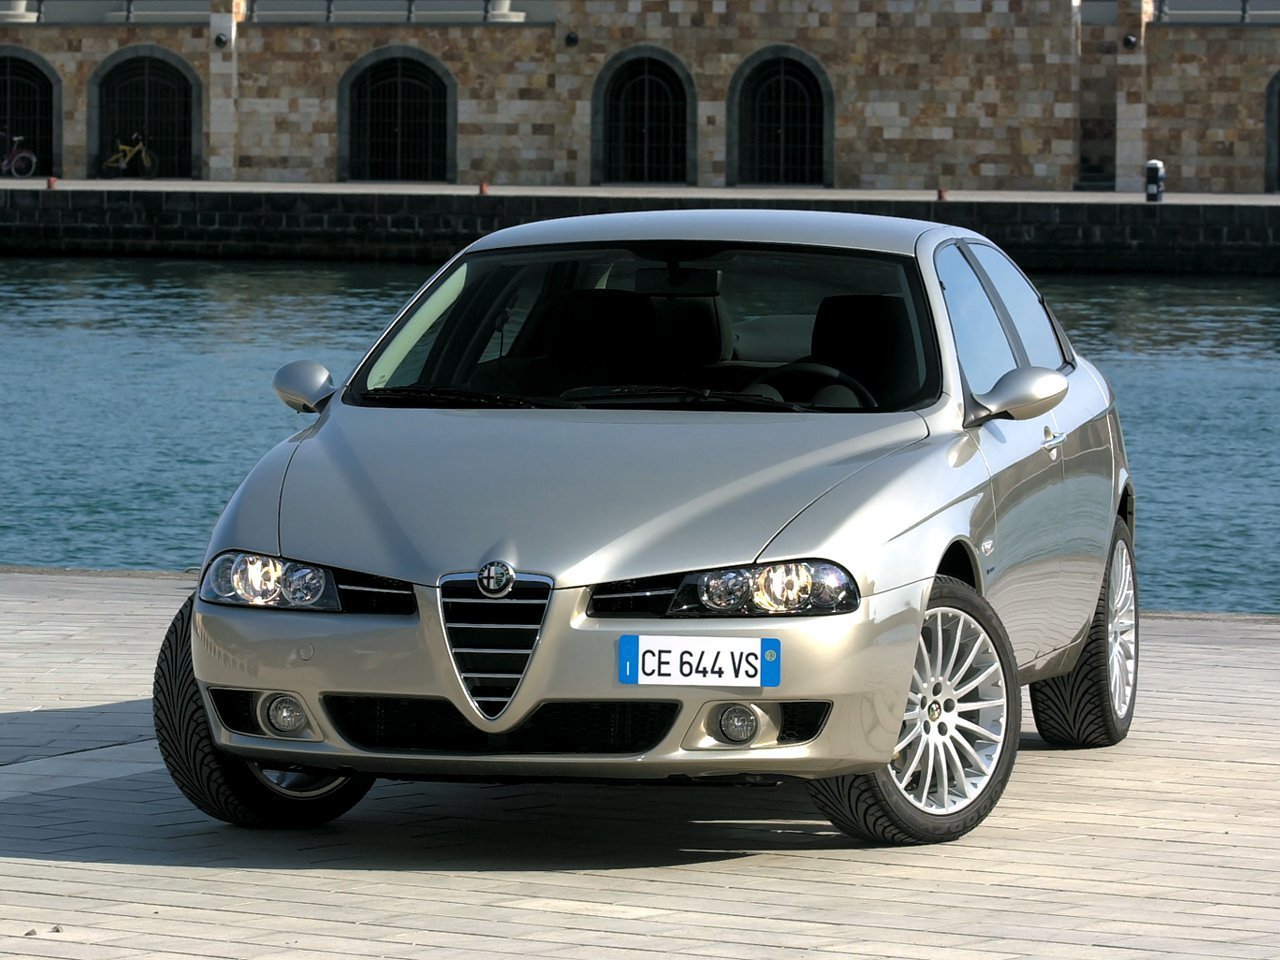 Расход газа восьми комплектаций седана Alfa Romeo 156. Разница стоимости заправки газом и бензином. Автономный пробег до и после установки ГБО.